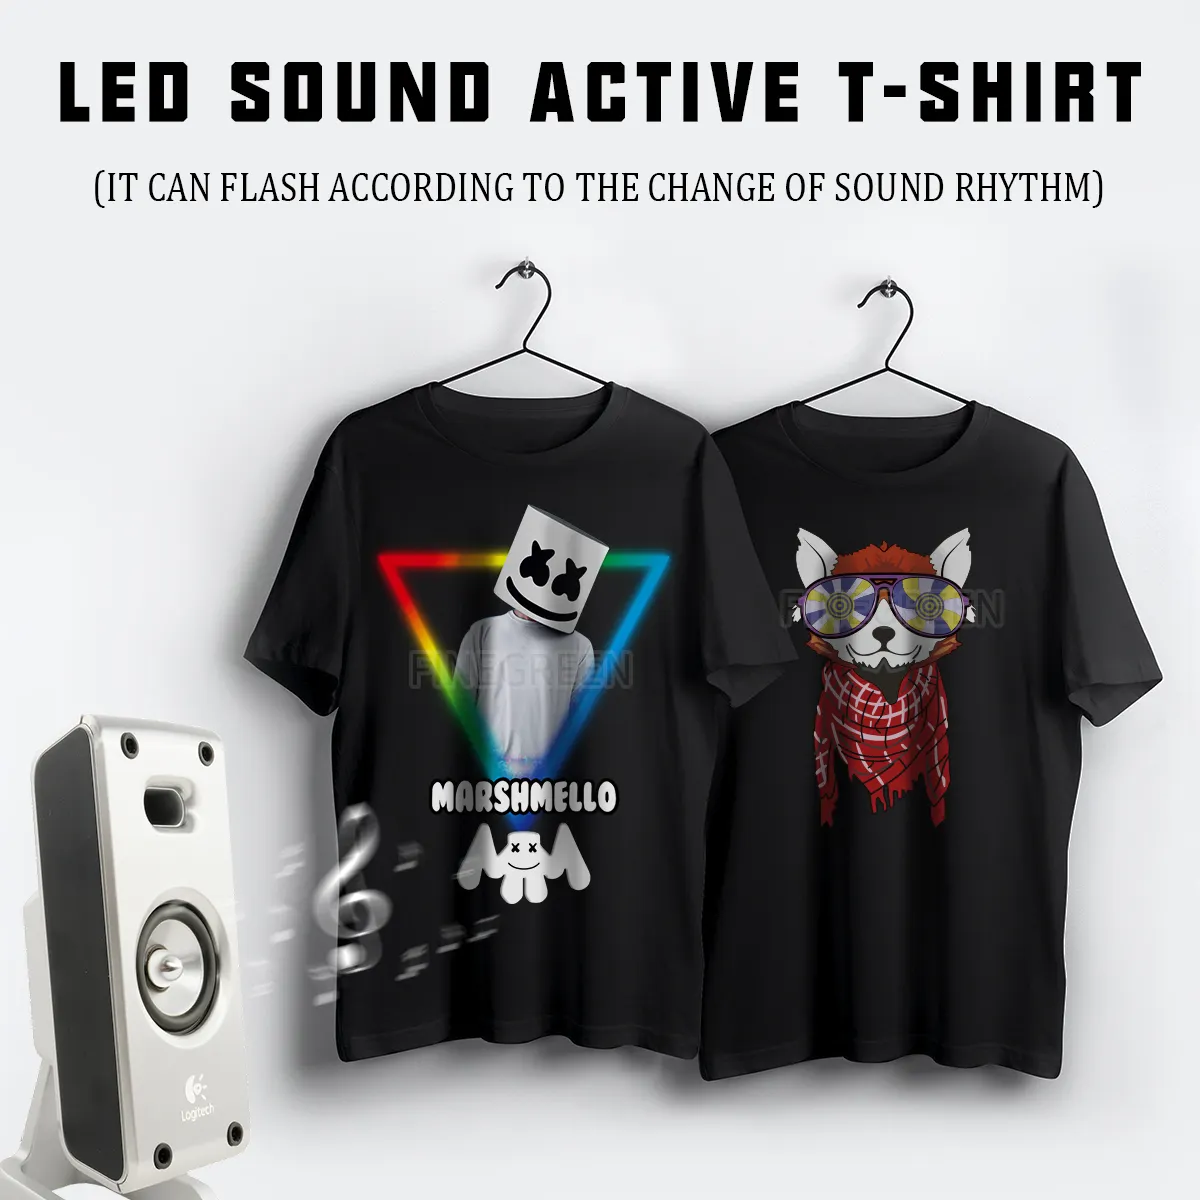 Led Light T-shirt El Flashing Led 5 Lighting Models T Shirts Customized Design Led T Shirt